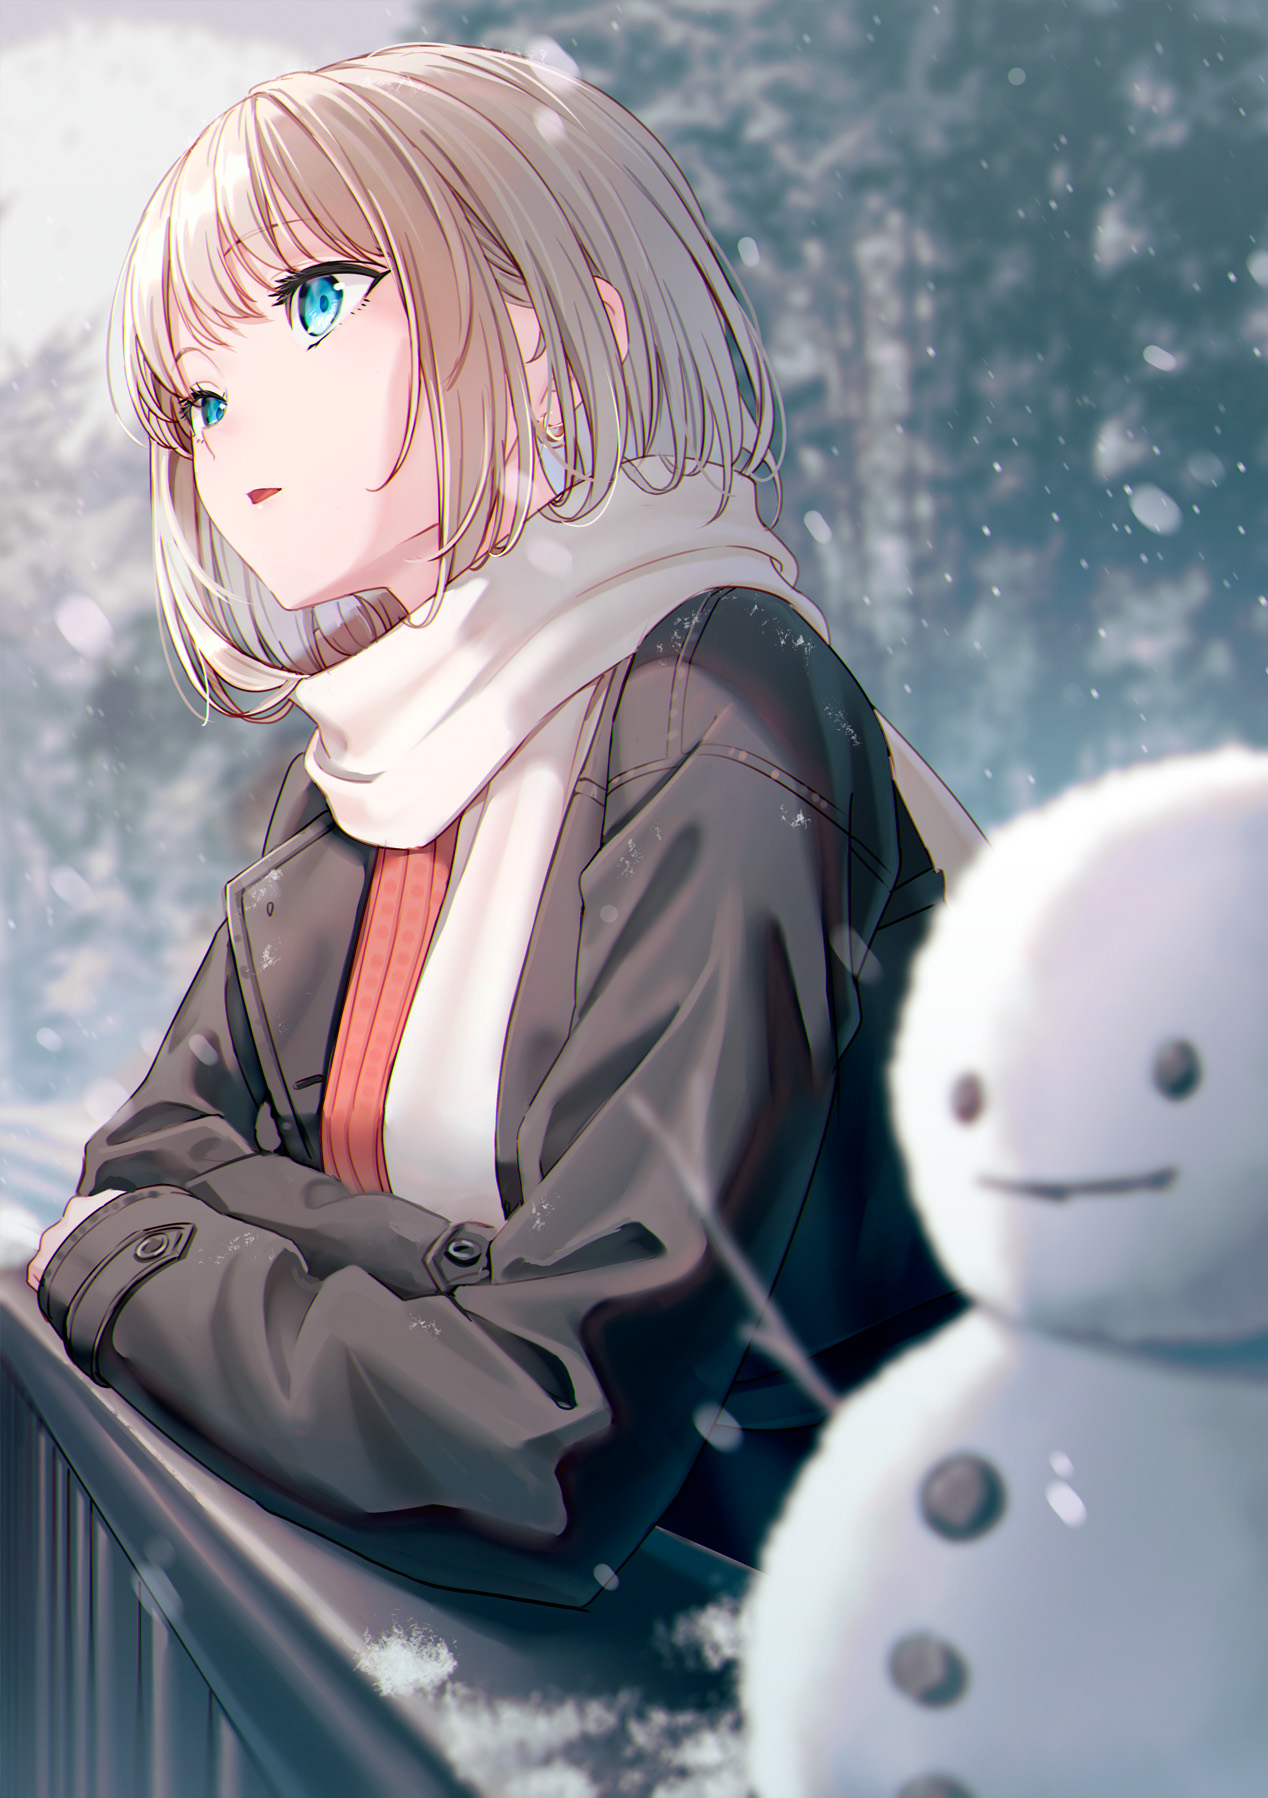 Anime 1268x1798 anime anime girls Hyuuga Azuri artwork ash blonde blue eyes scarf snowman short hair railing leather coat